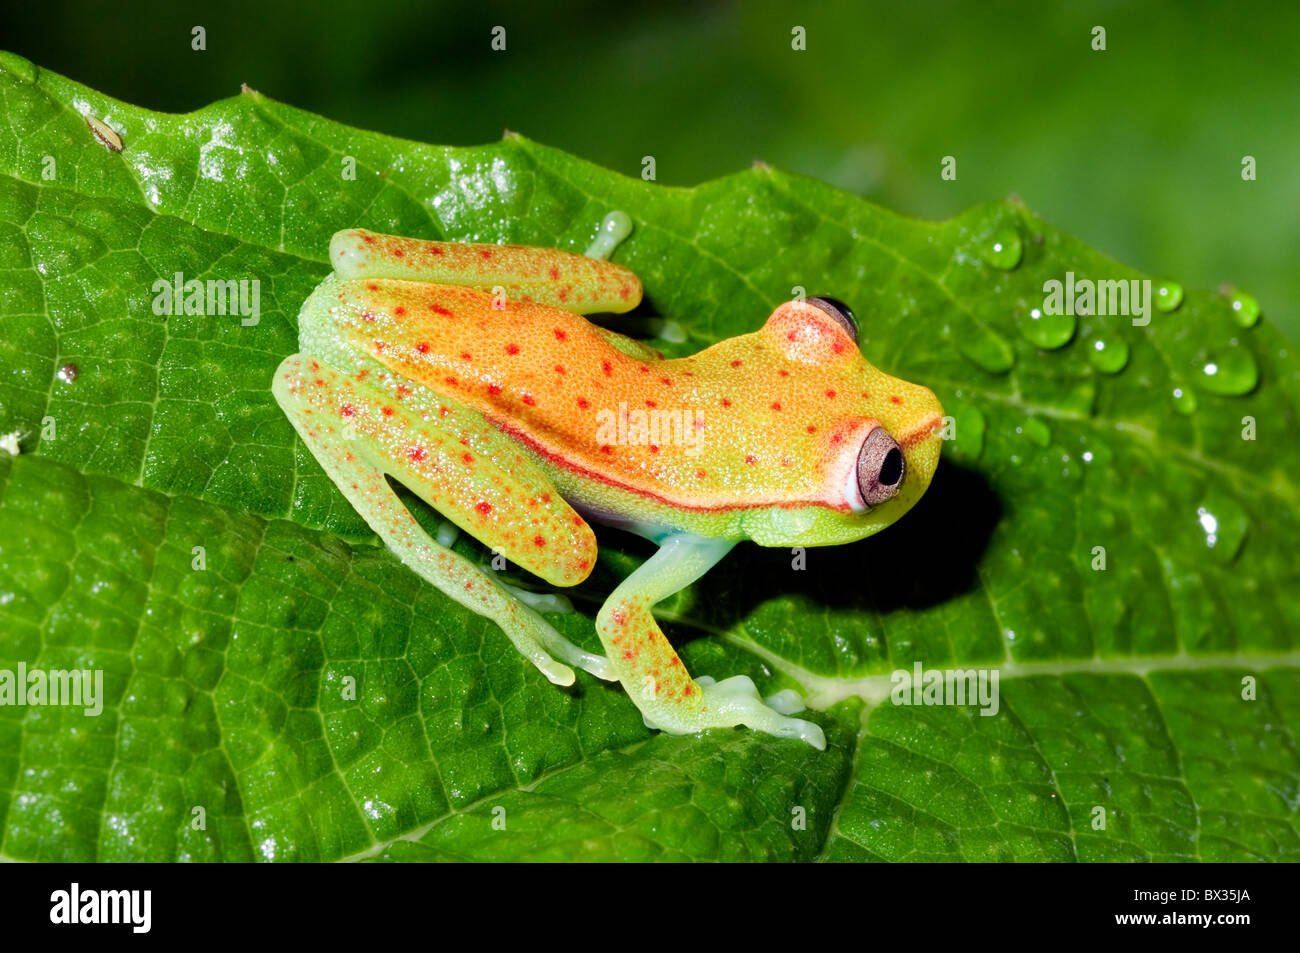 'Hyla punctata' tree frog from Ecuador Stock Photo